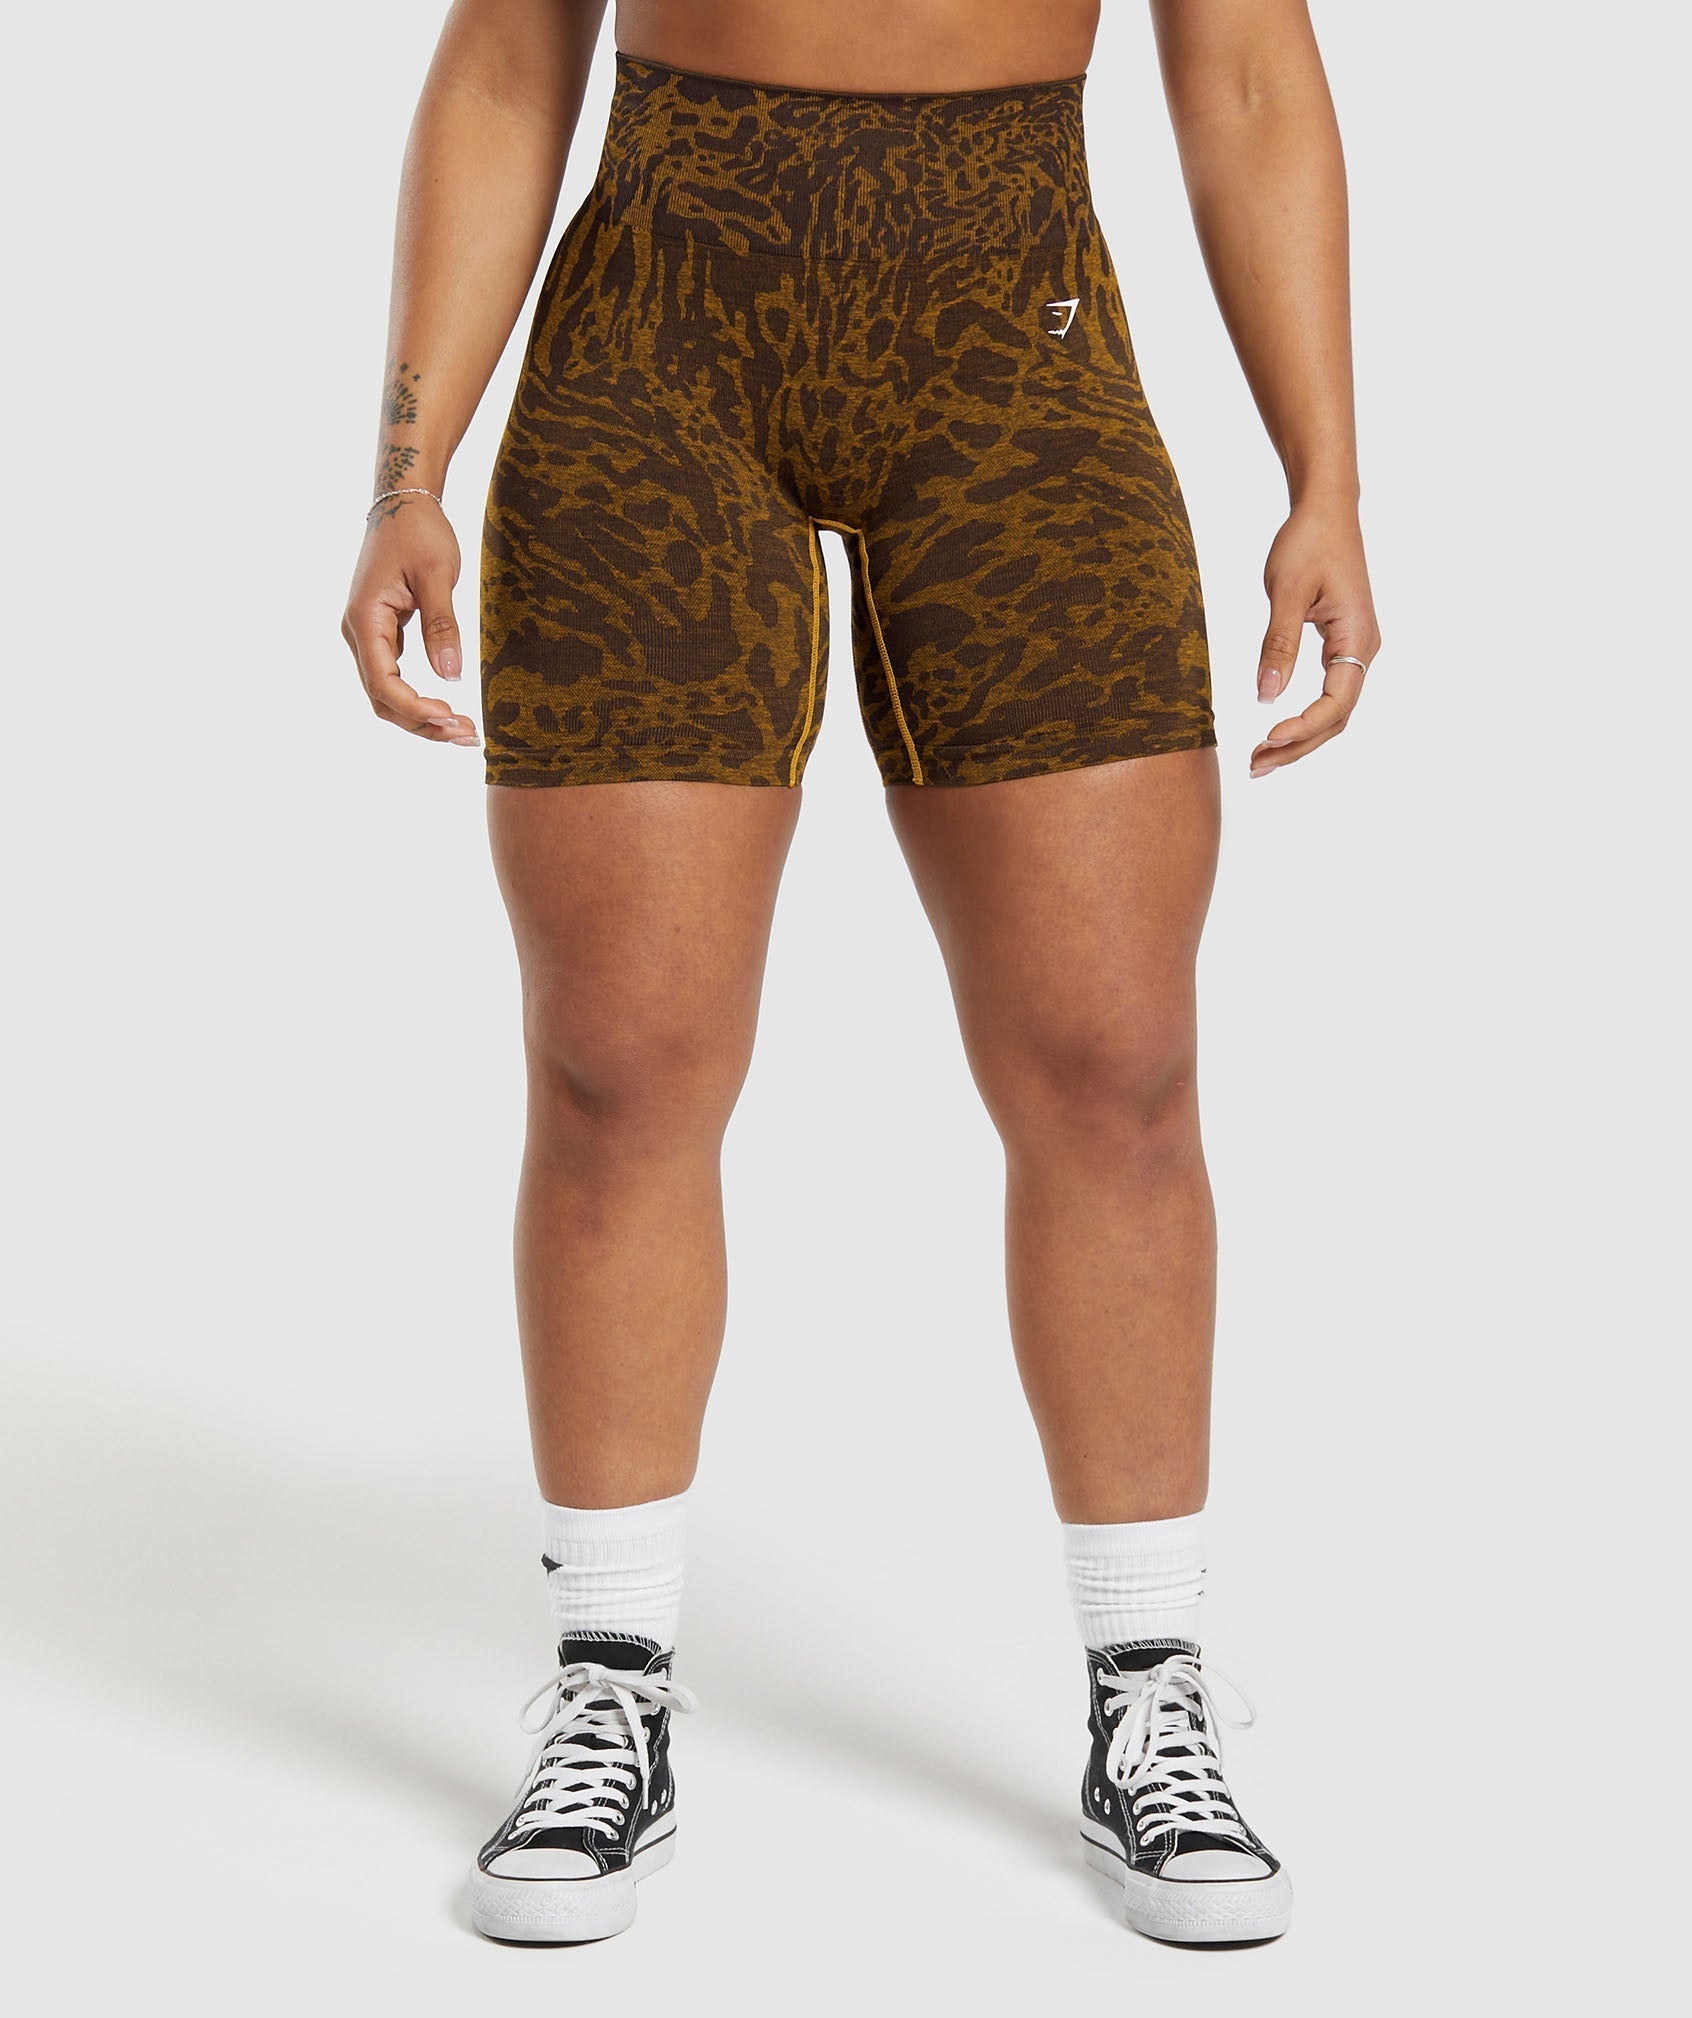 Adapt Safari Tight Shorts in Archive Brown/Burnt Yellow